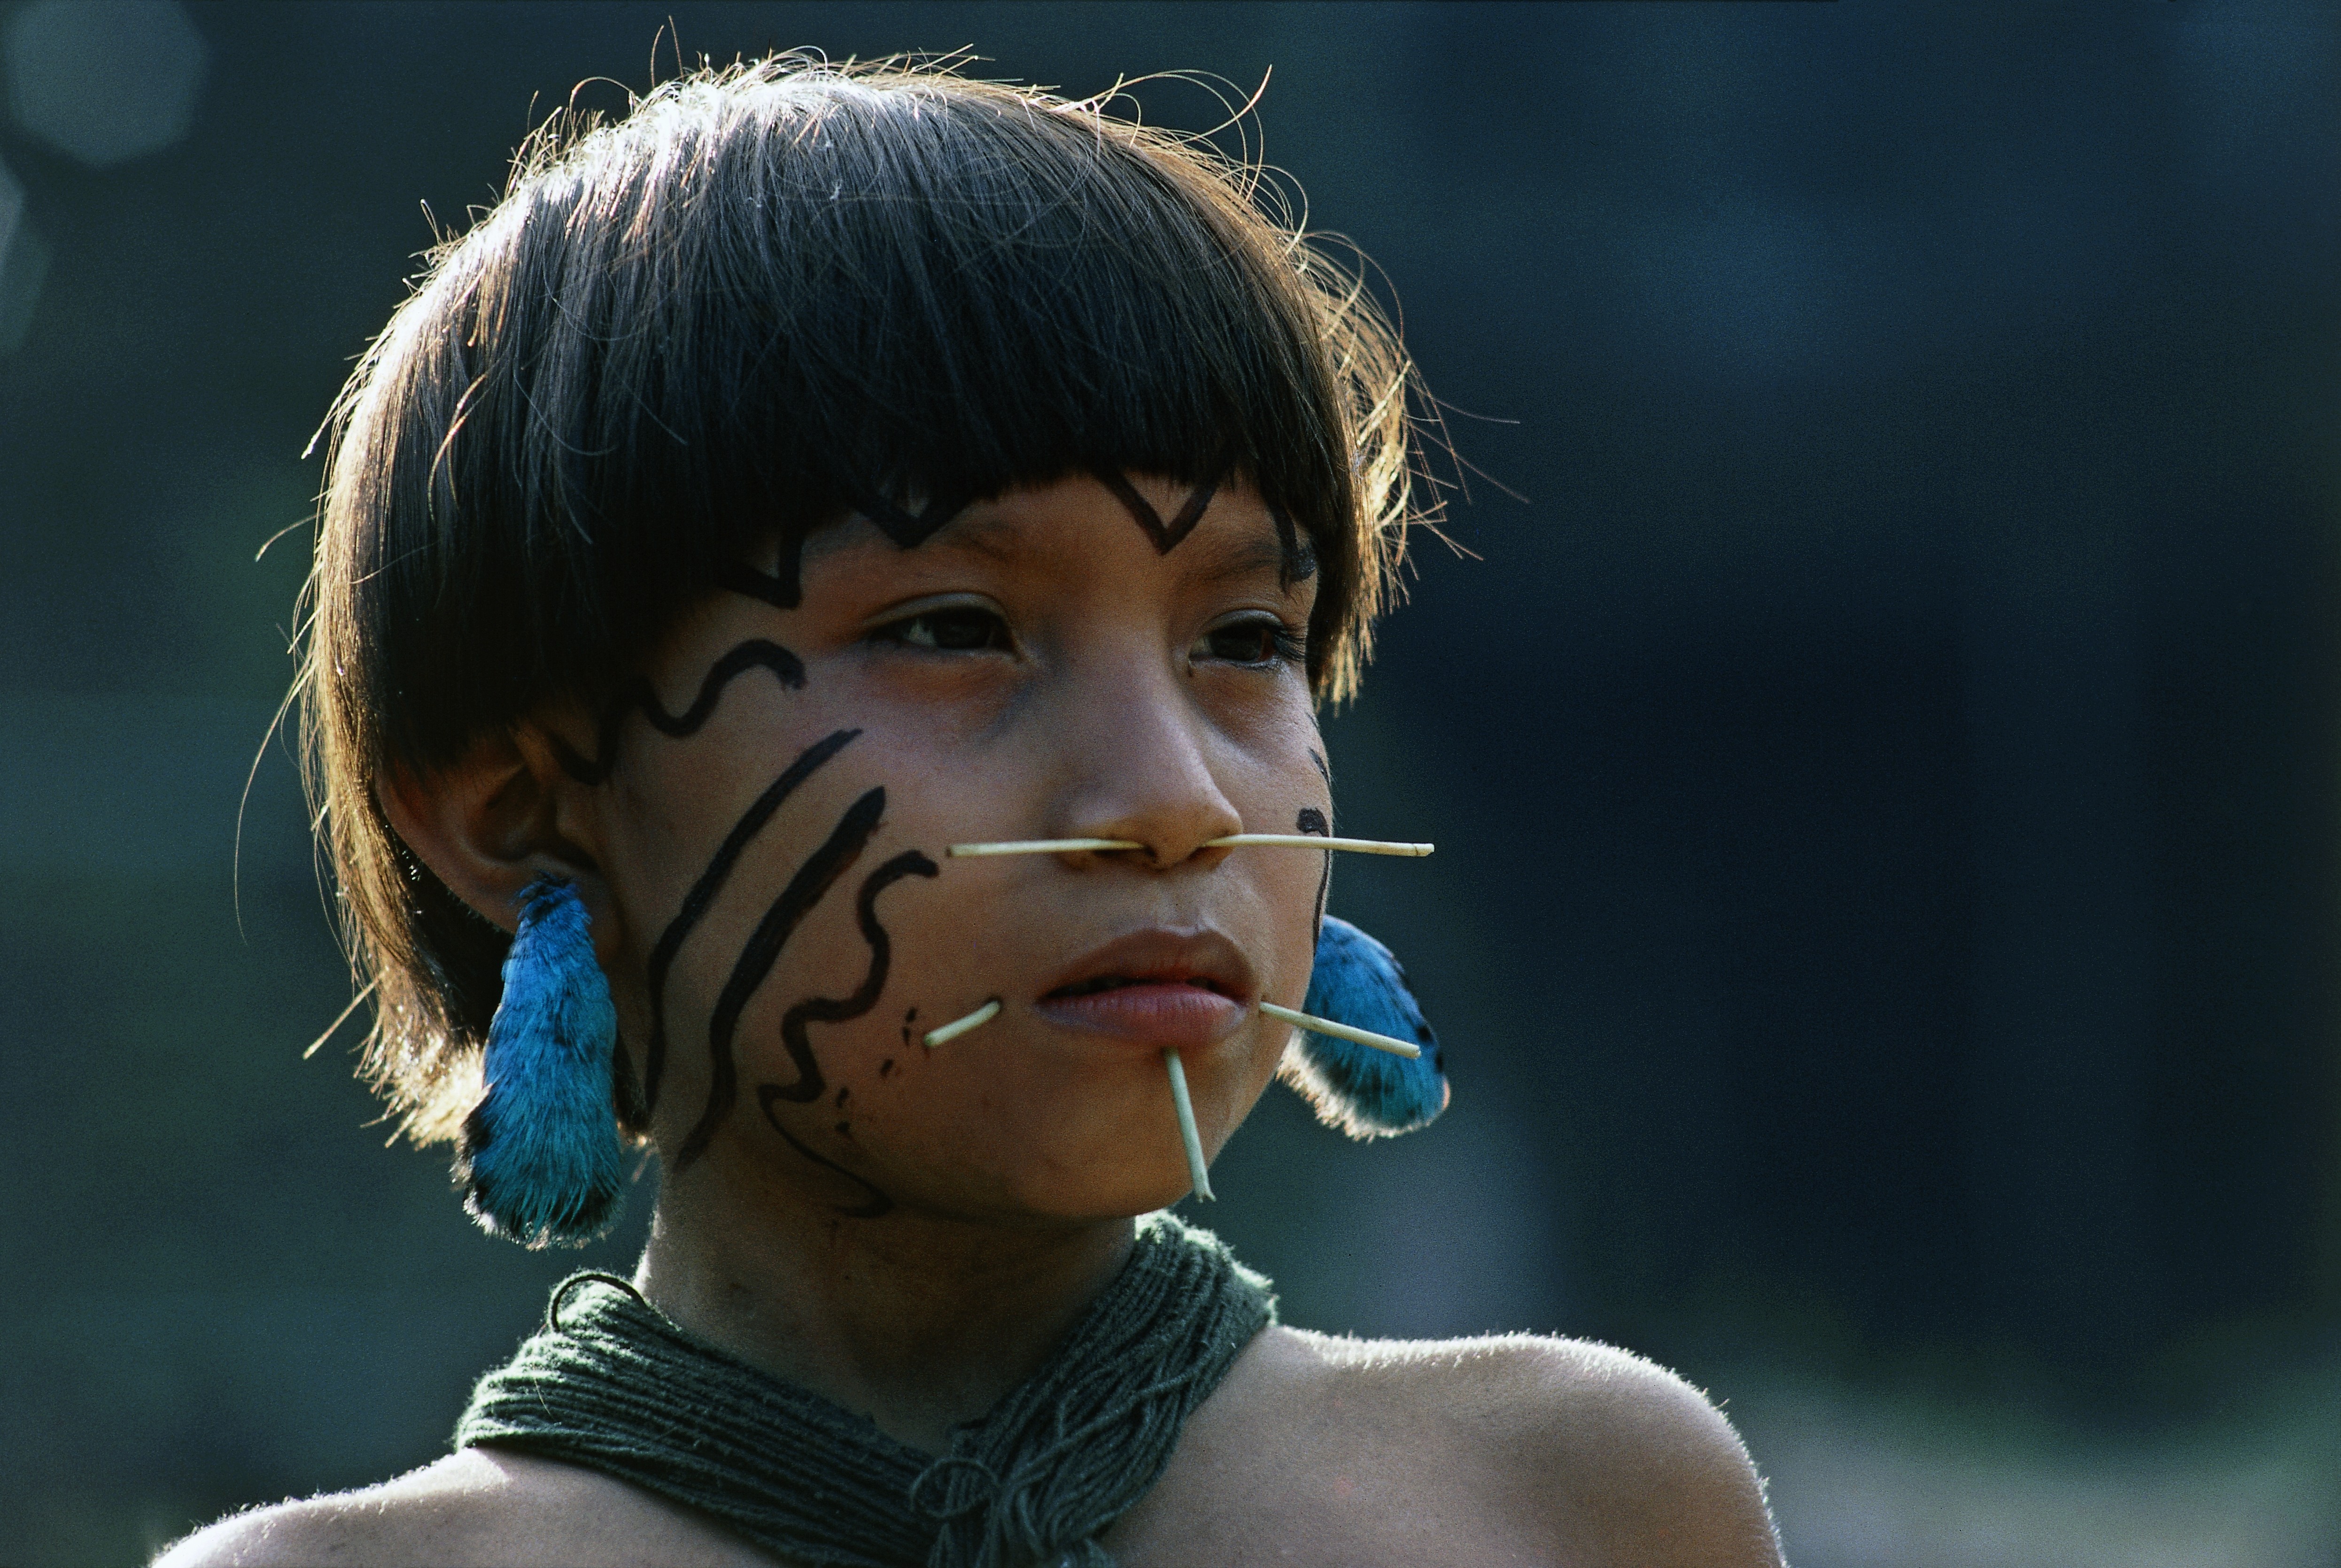 VENEZUELA - APRIL 23: Yanomami girl with fine palm sticks through her face, traditional symbols of beauty, The Amazon rainforest, Venezuela. (Photo by DeAgostini/Getty Images) (Foto: De Agostini via Getty Images)